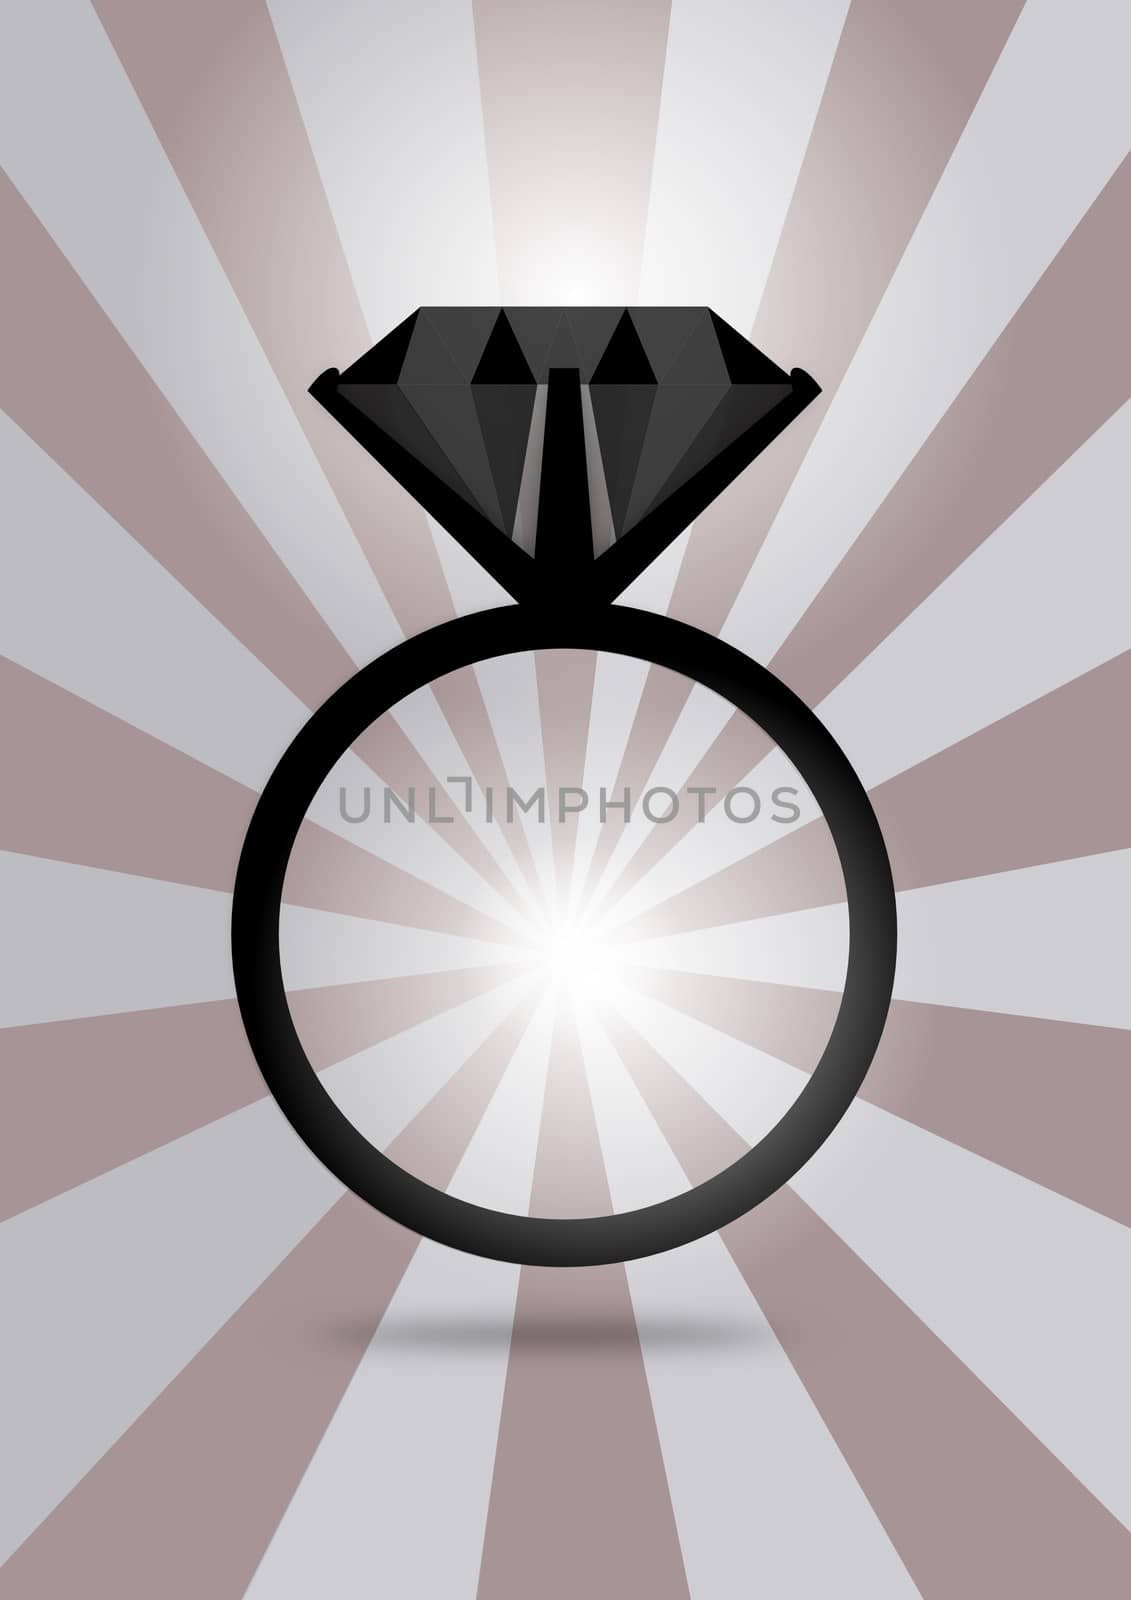 Illustration of a black diamond ring